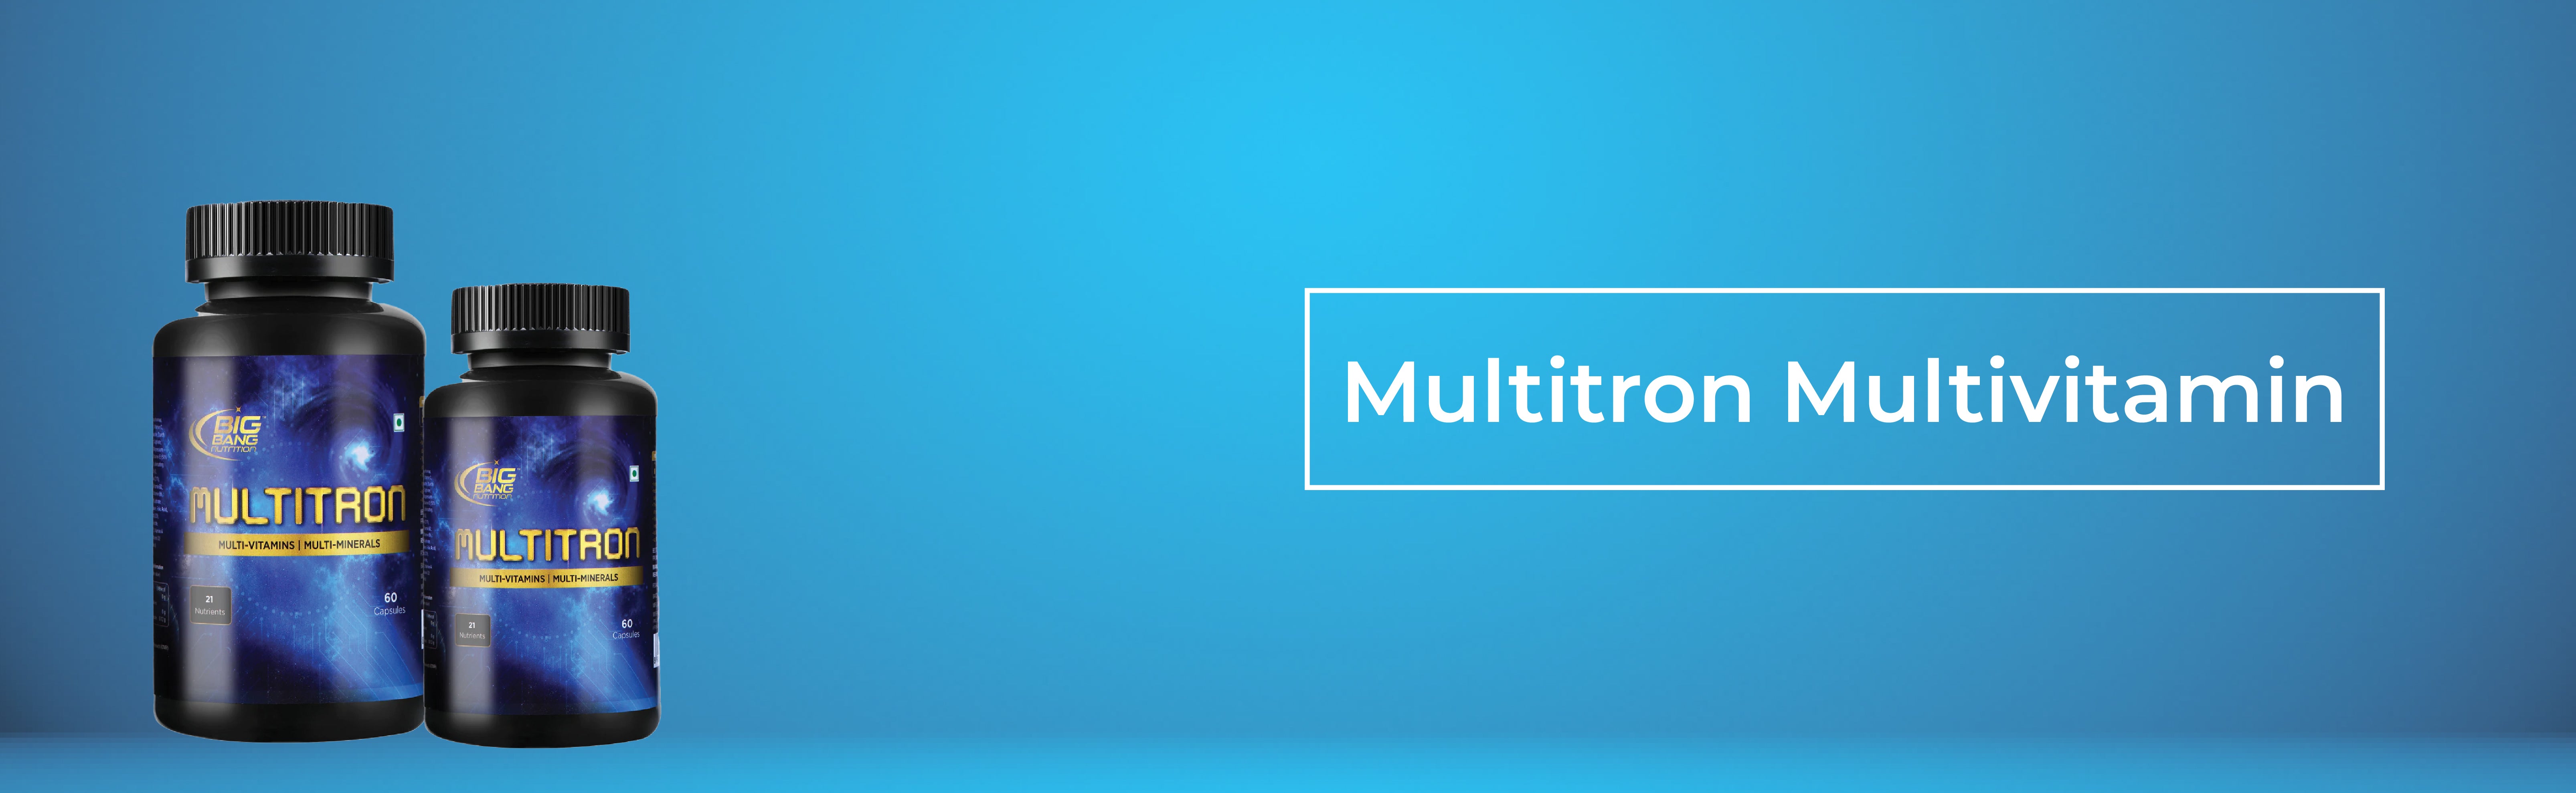 Multitron multivitamin